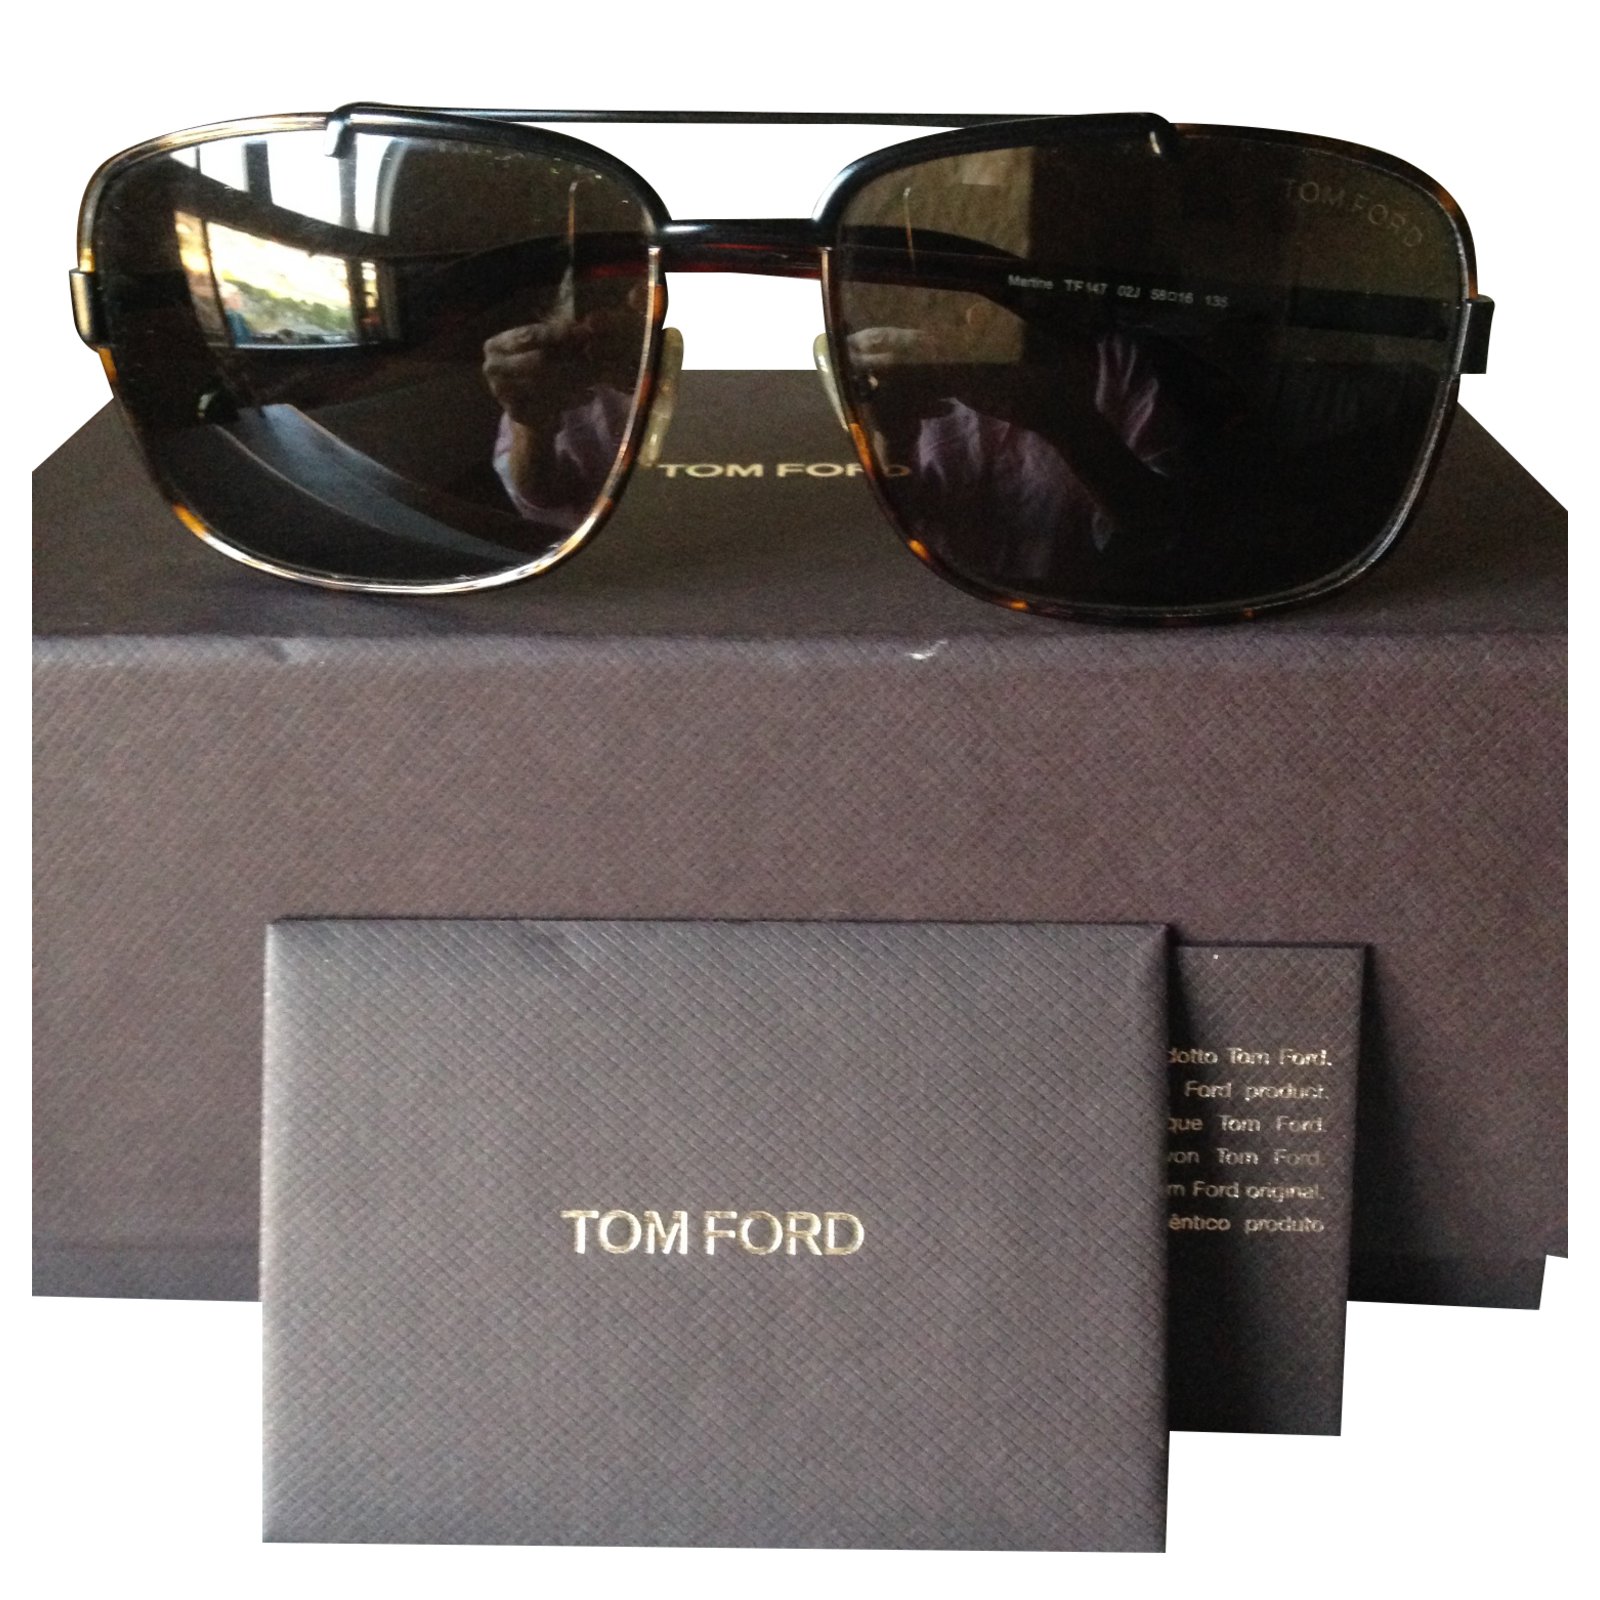 https://cdn1.jolicloset.com/imgr/full/2017/03/36583-1/brown-glass-kit-astuccio-soft-b1-donna-tom-ford-sunglasses.jpg